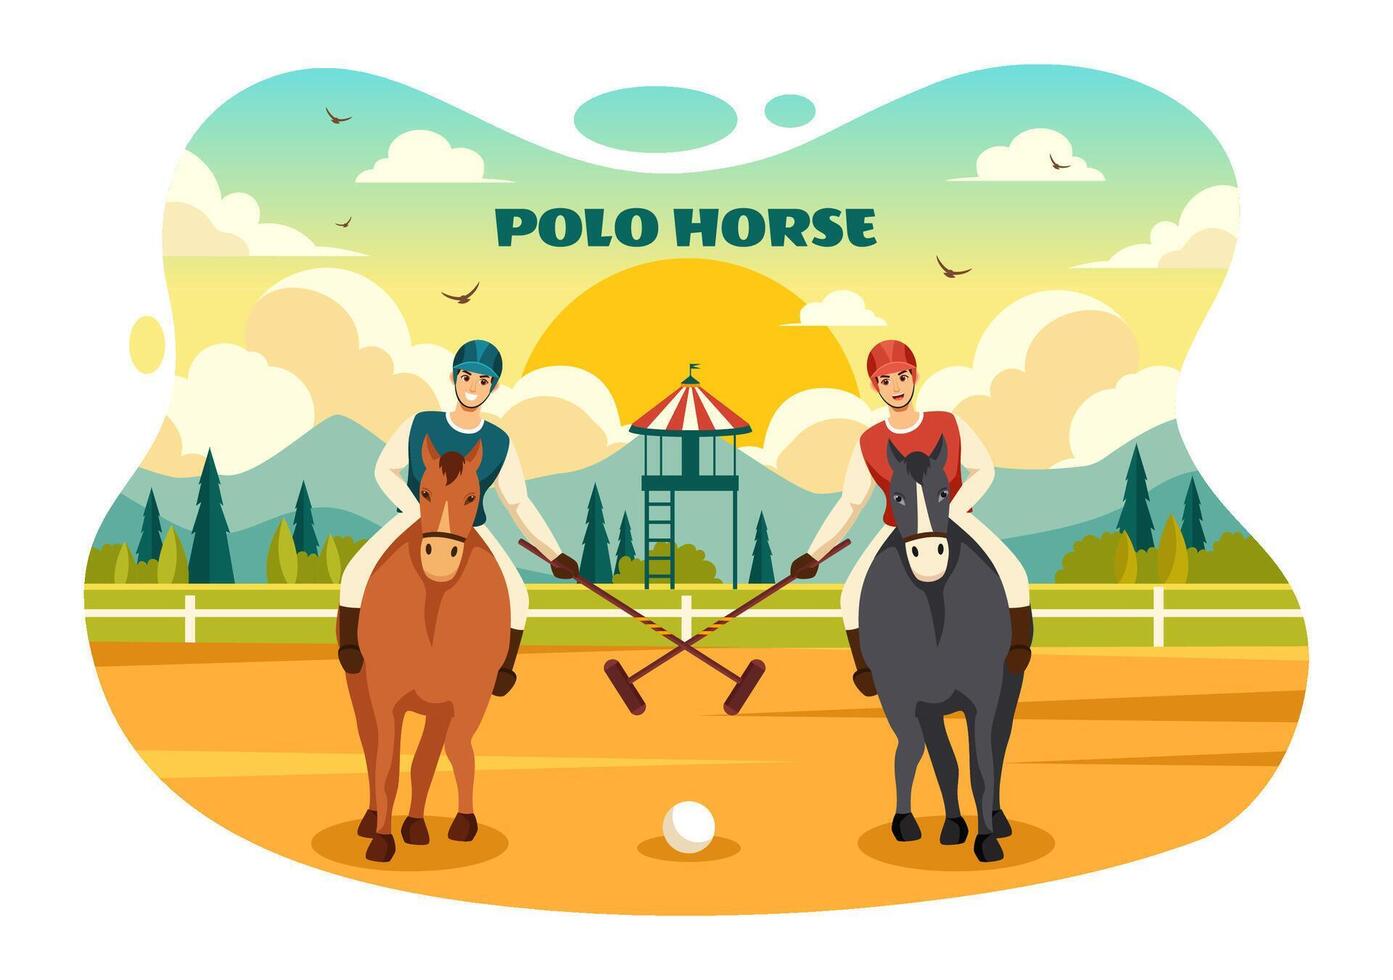 polo caballo Deportes ilustración con jugador montando caballo y participación palo utilizar equipo conjunto a competencia en plano dibujos animados antecedentes vector